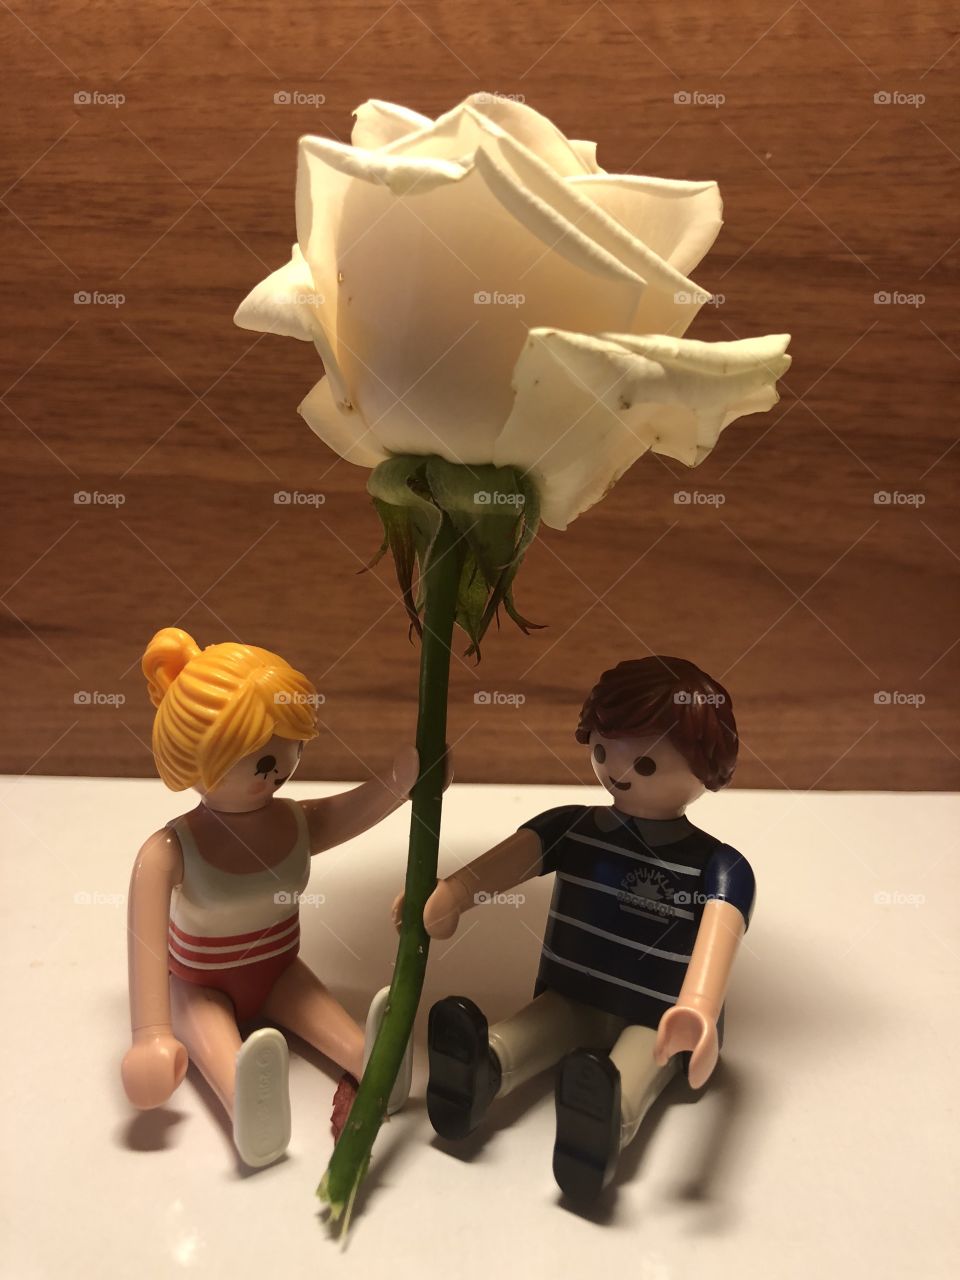 Under the rose love